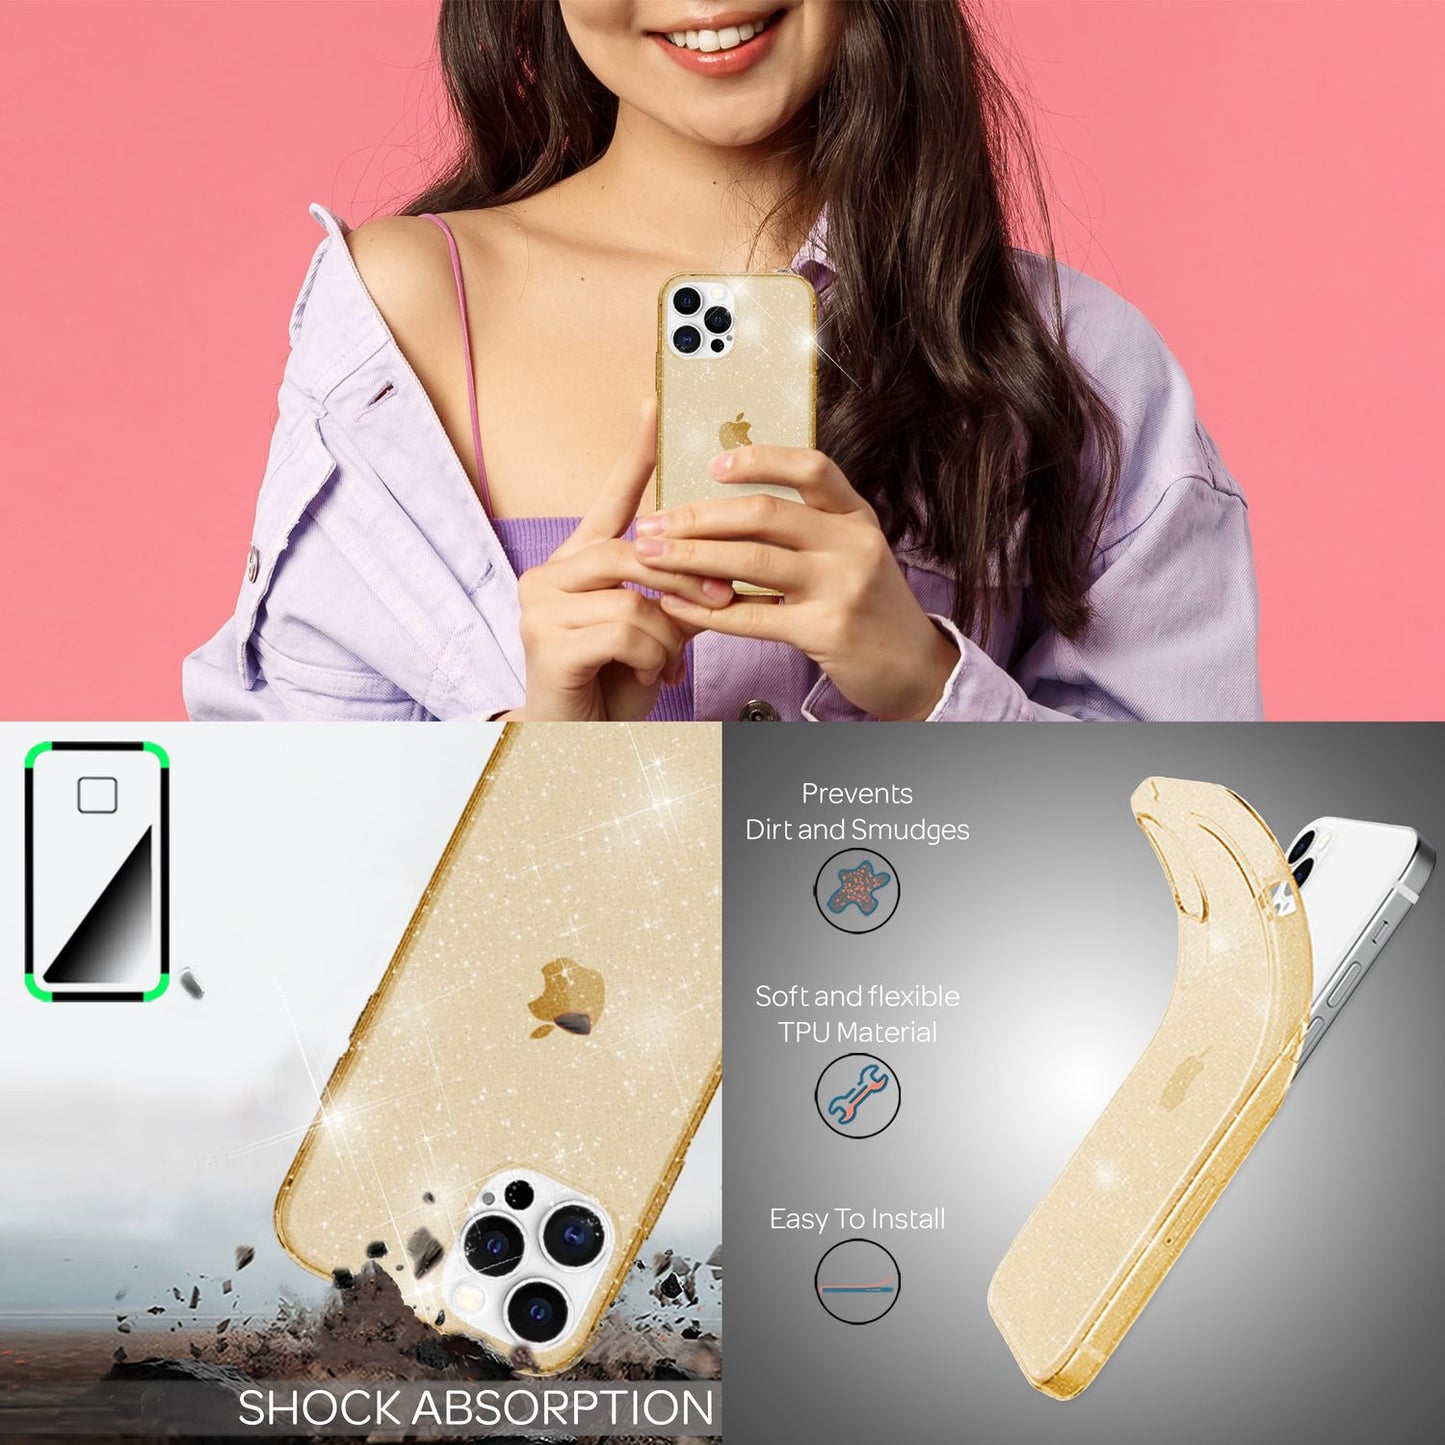 NALIA Glitzer Hülle für iPhone 13 Pro Max, Transparent Glitter Cover Handy Case